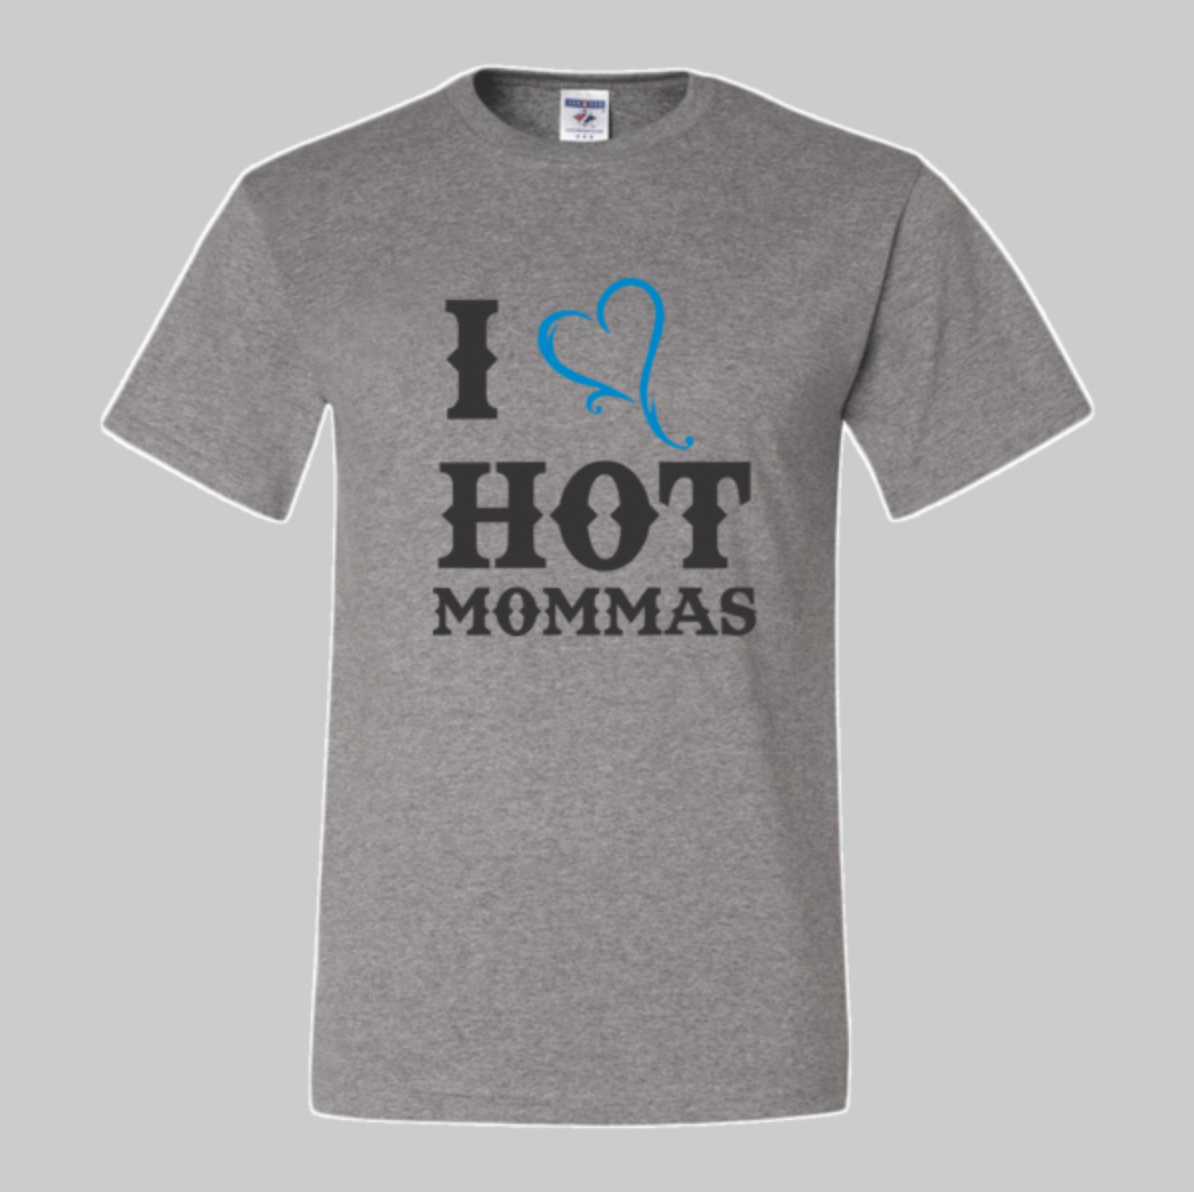 I Heart Hot Moms